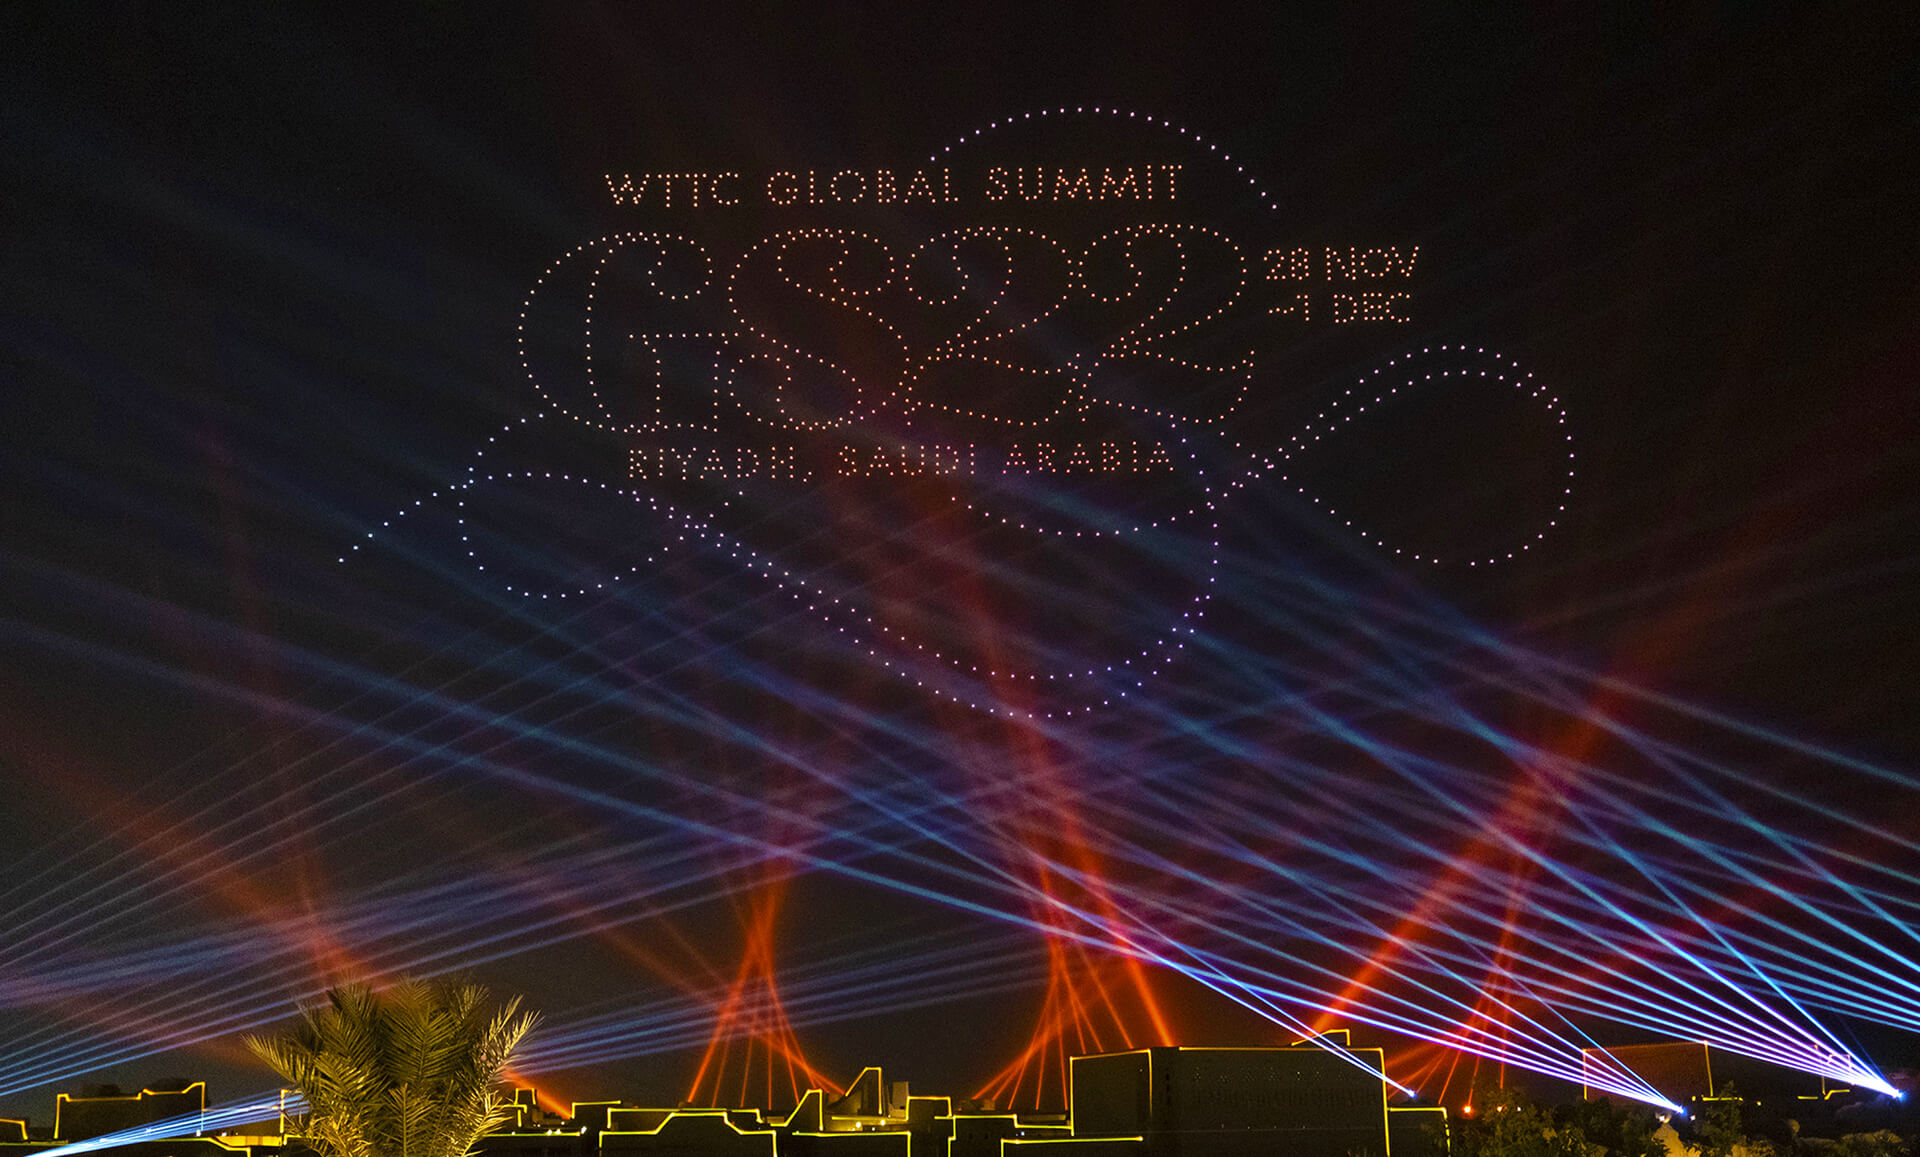 WTTC Global Summit drone show